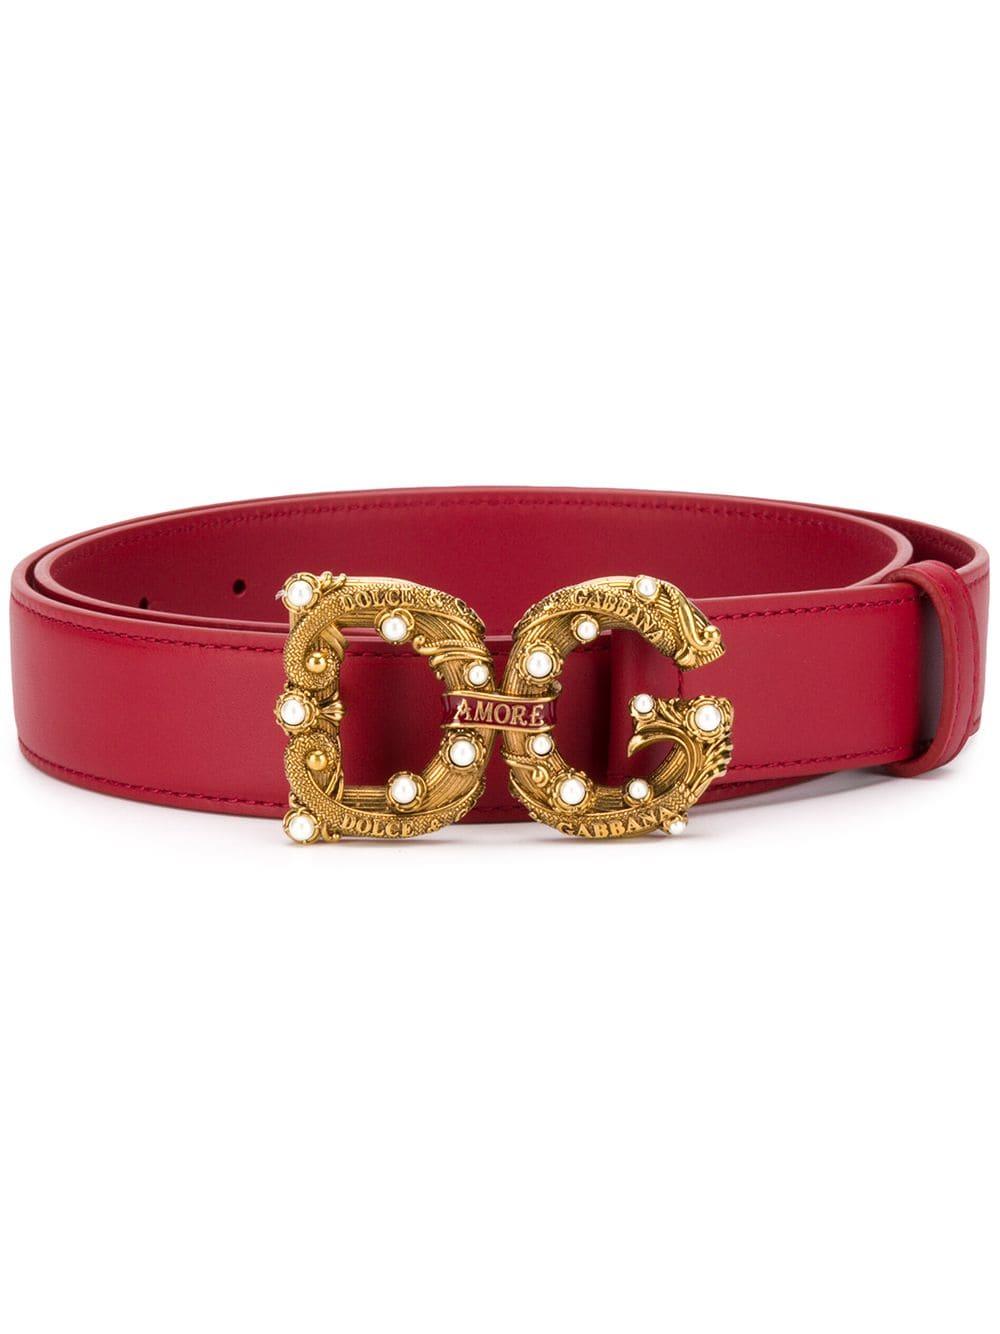 Dolce & Gabbana Calfskin Belt With Dg Amore Logo in Red | Lyst